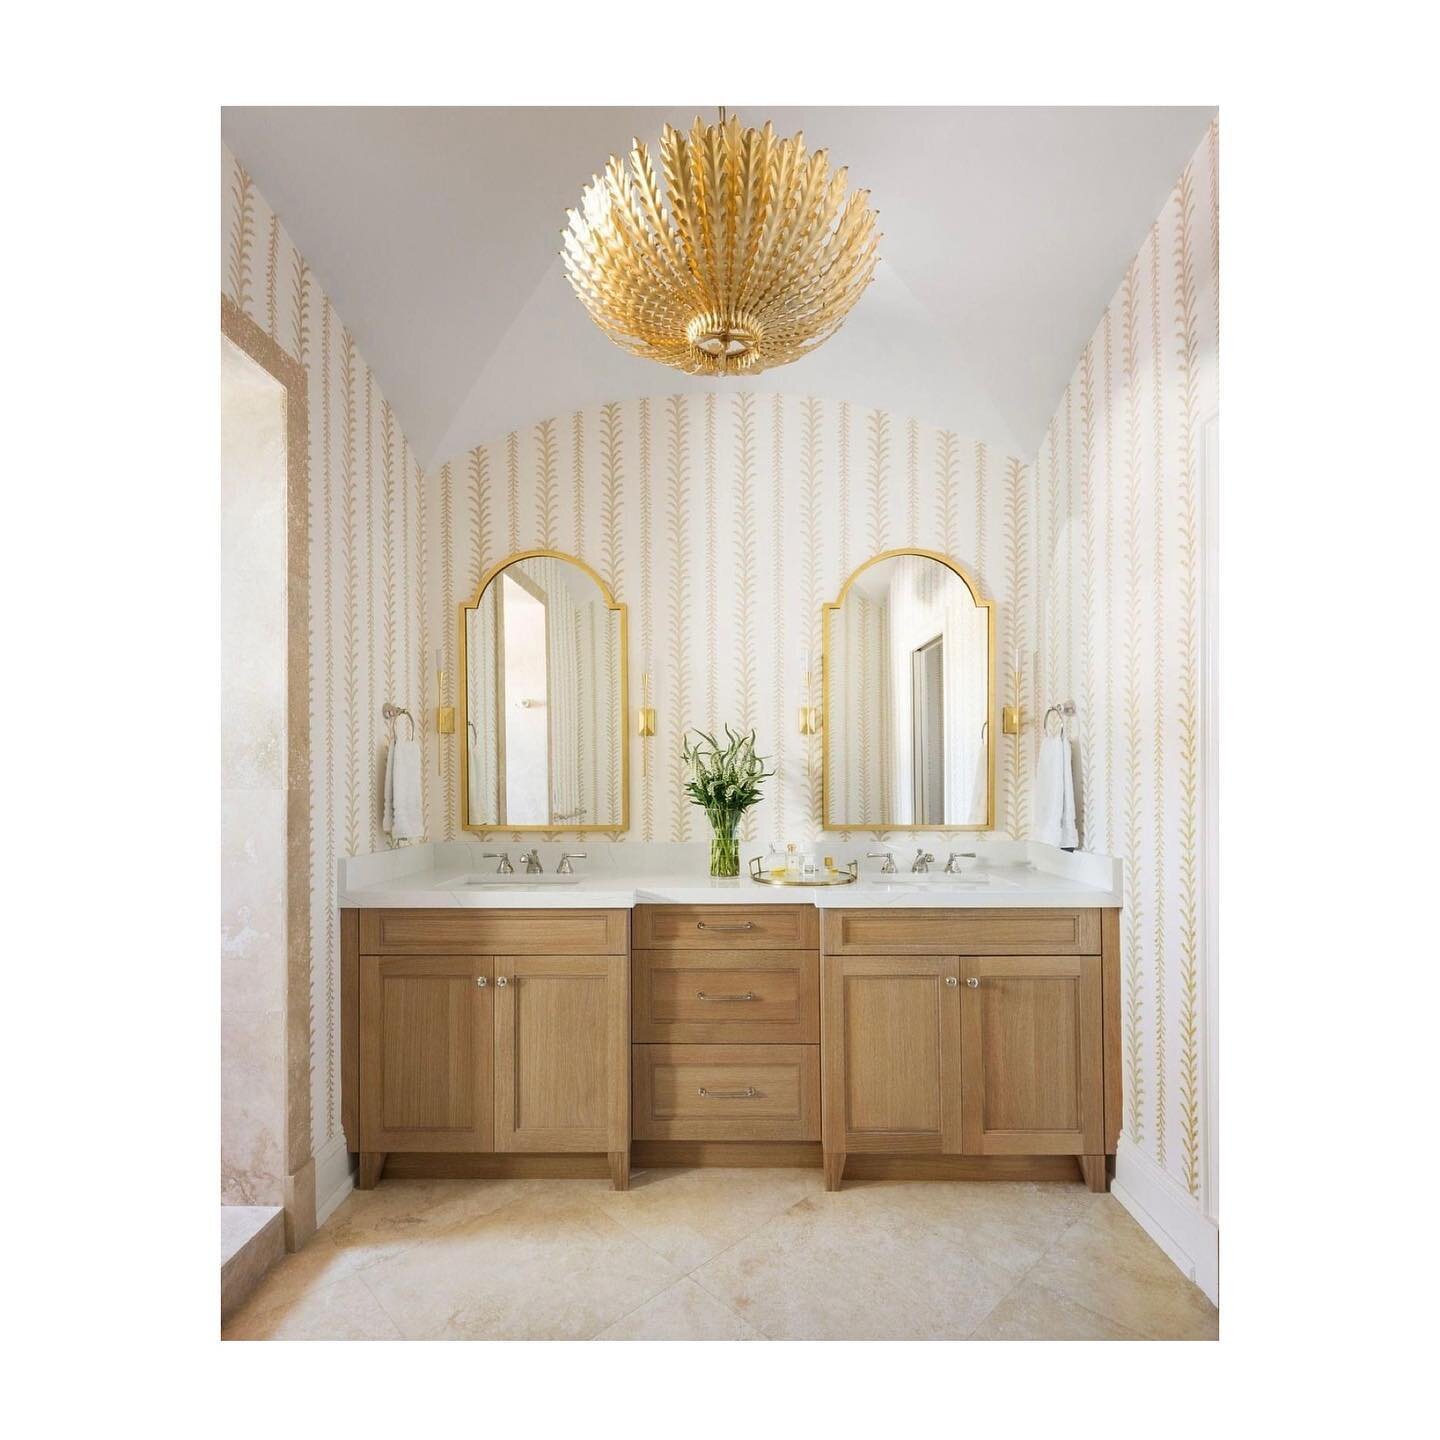 SSDC spotlight on @visualcomfort 🤍 We love how these golden details make the room elegant and beautiful! 

Designed by: @jettthompson_interiors
📸: @spmphoto

#interiordesign #massachusetts #goldendetails #chandelier #luxury #golden #southshoredesig